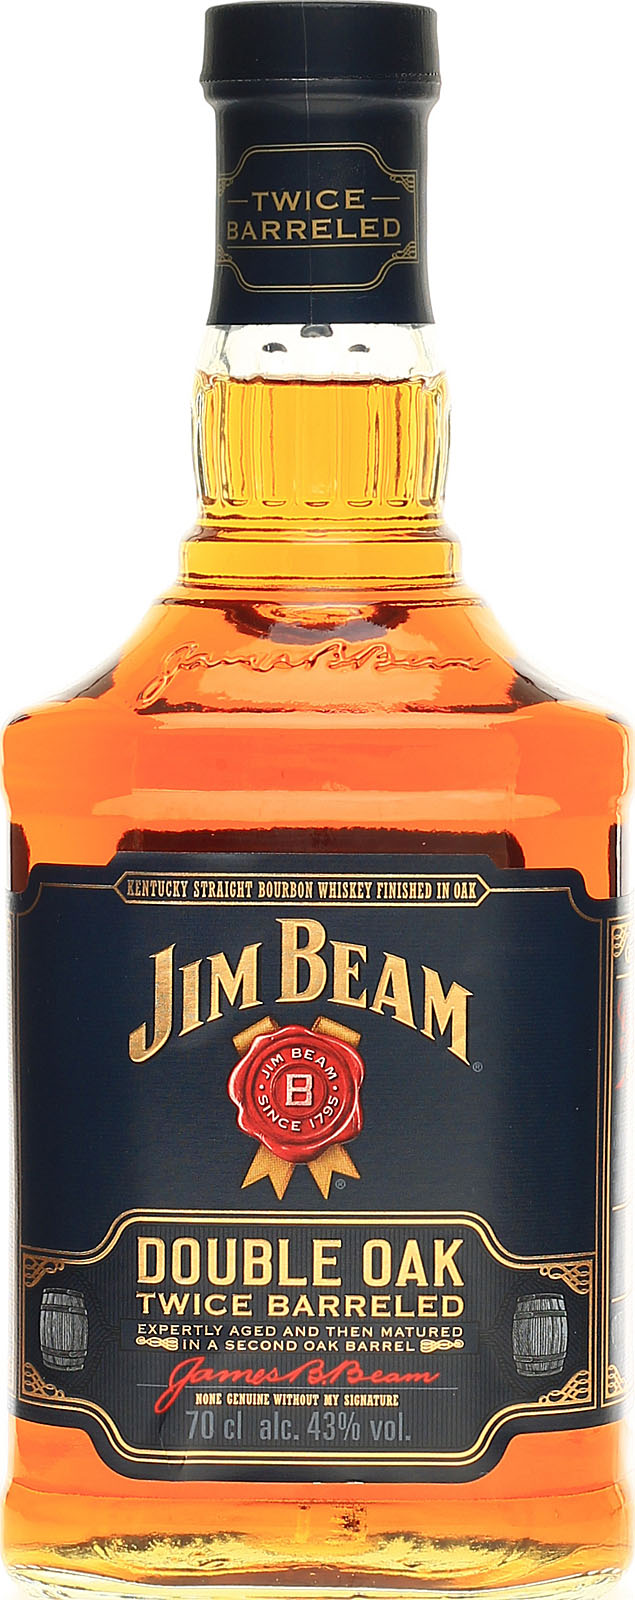 Jim Beam Double Oak Barreled im Sh Twice uns bei Whisky